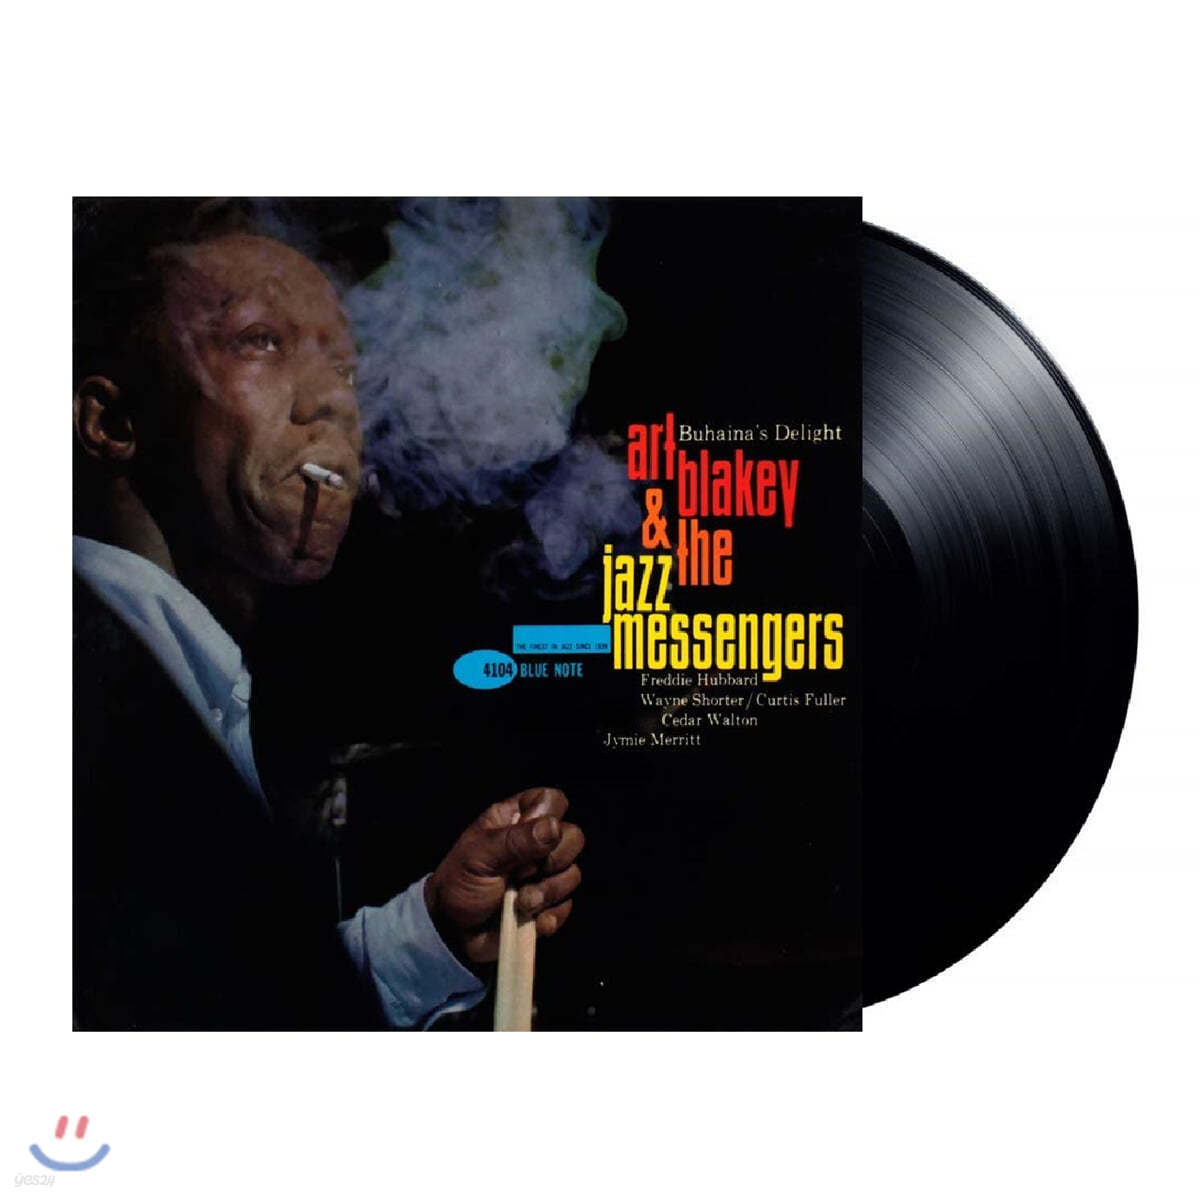 Art Blakey & The Jazz Messengers (아트 블레이키 앤 재즈 메신저스) - Buhaina's Delight [LP]